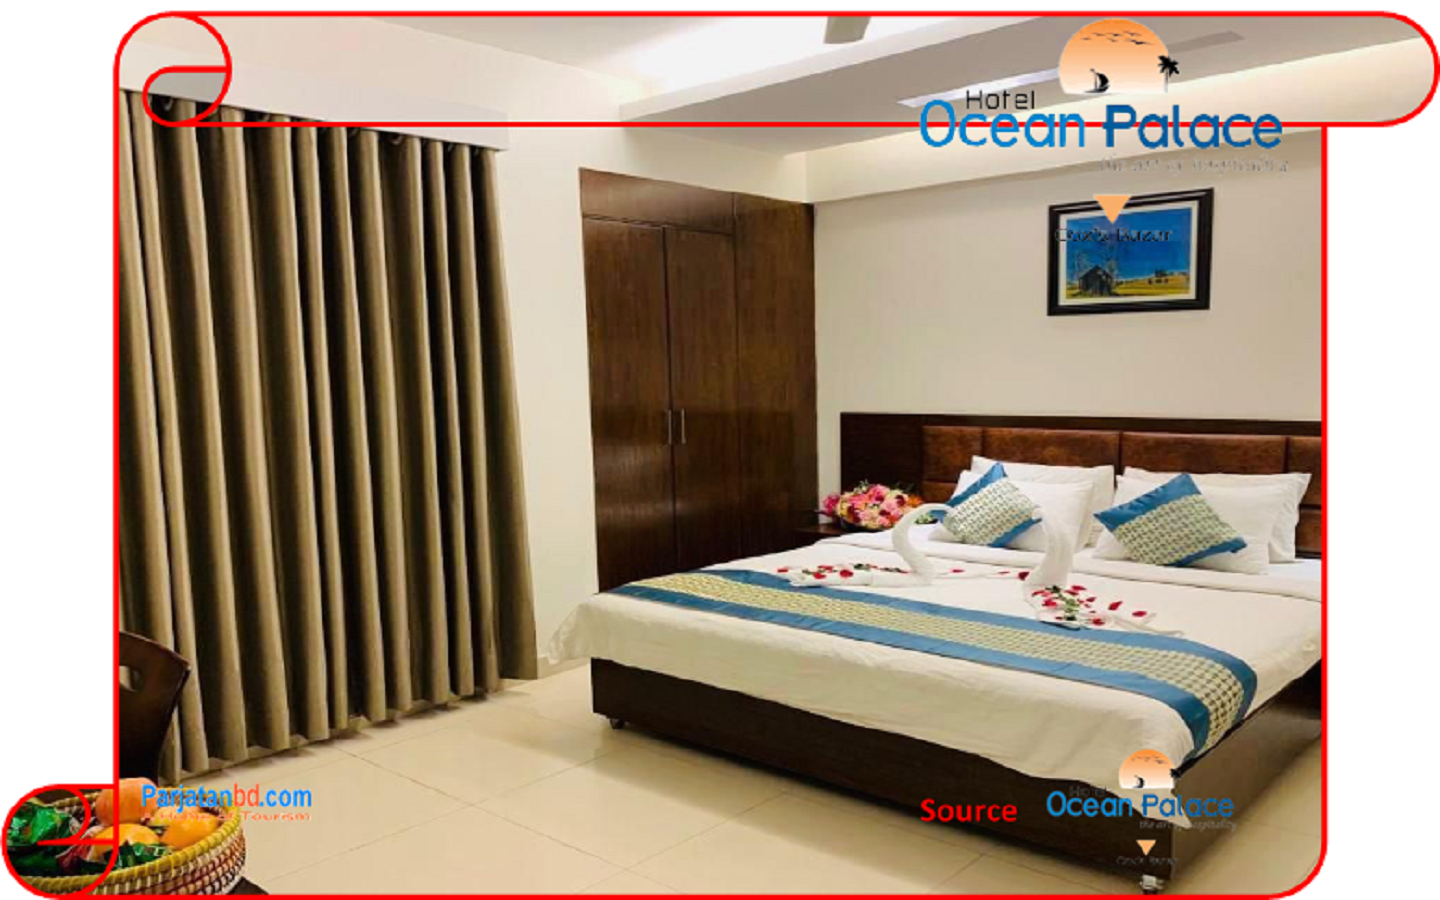 Room Deluxe Couple -1, Ocean Palace Hotel, Coxs Bazar